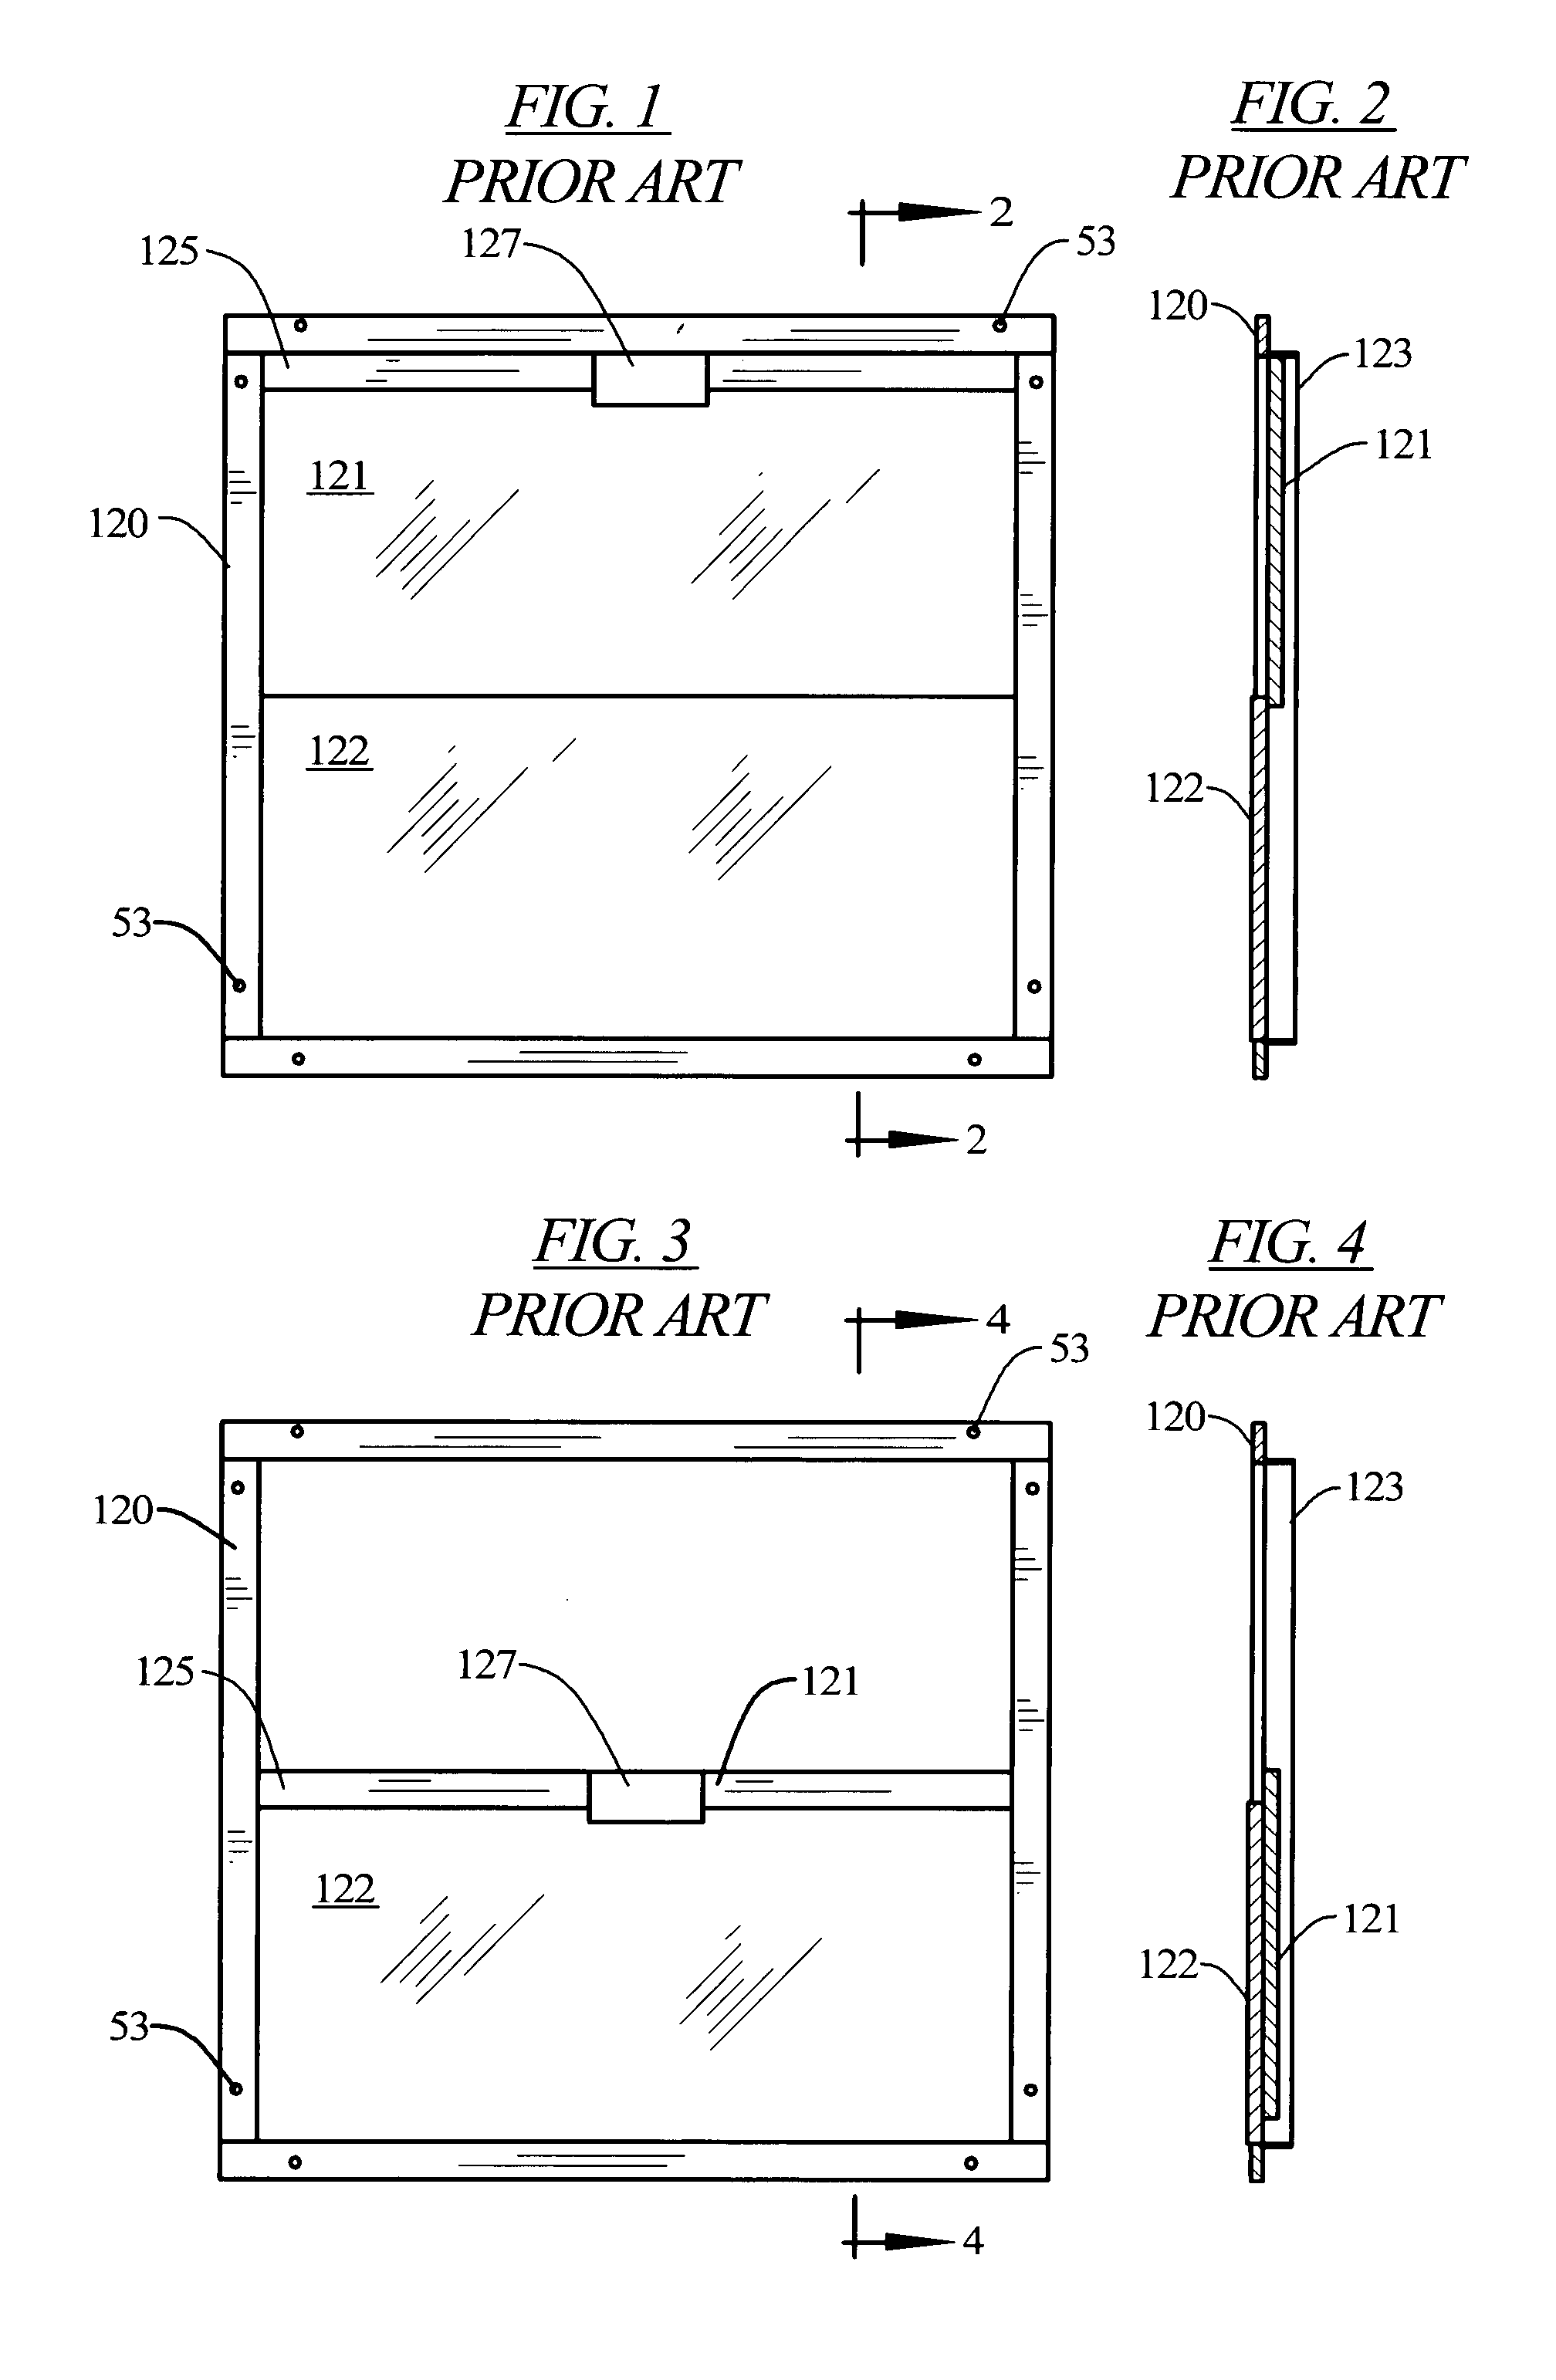 Filter window adapter unit